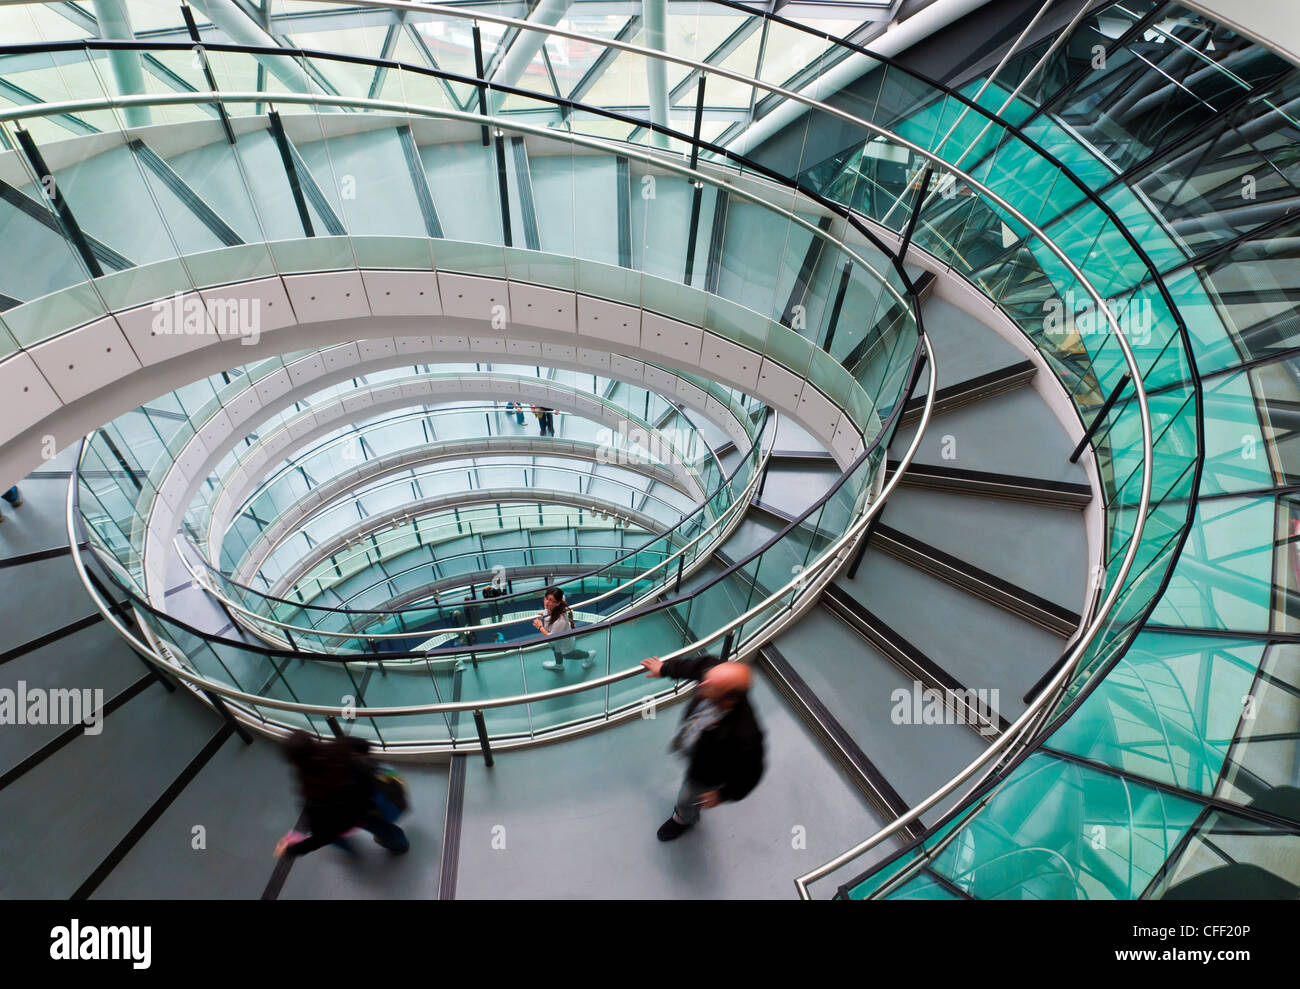 Escalera helicoidal, City Hall, Londres, Inglaterra, Reino Unido, Europa Foto de stock